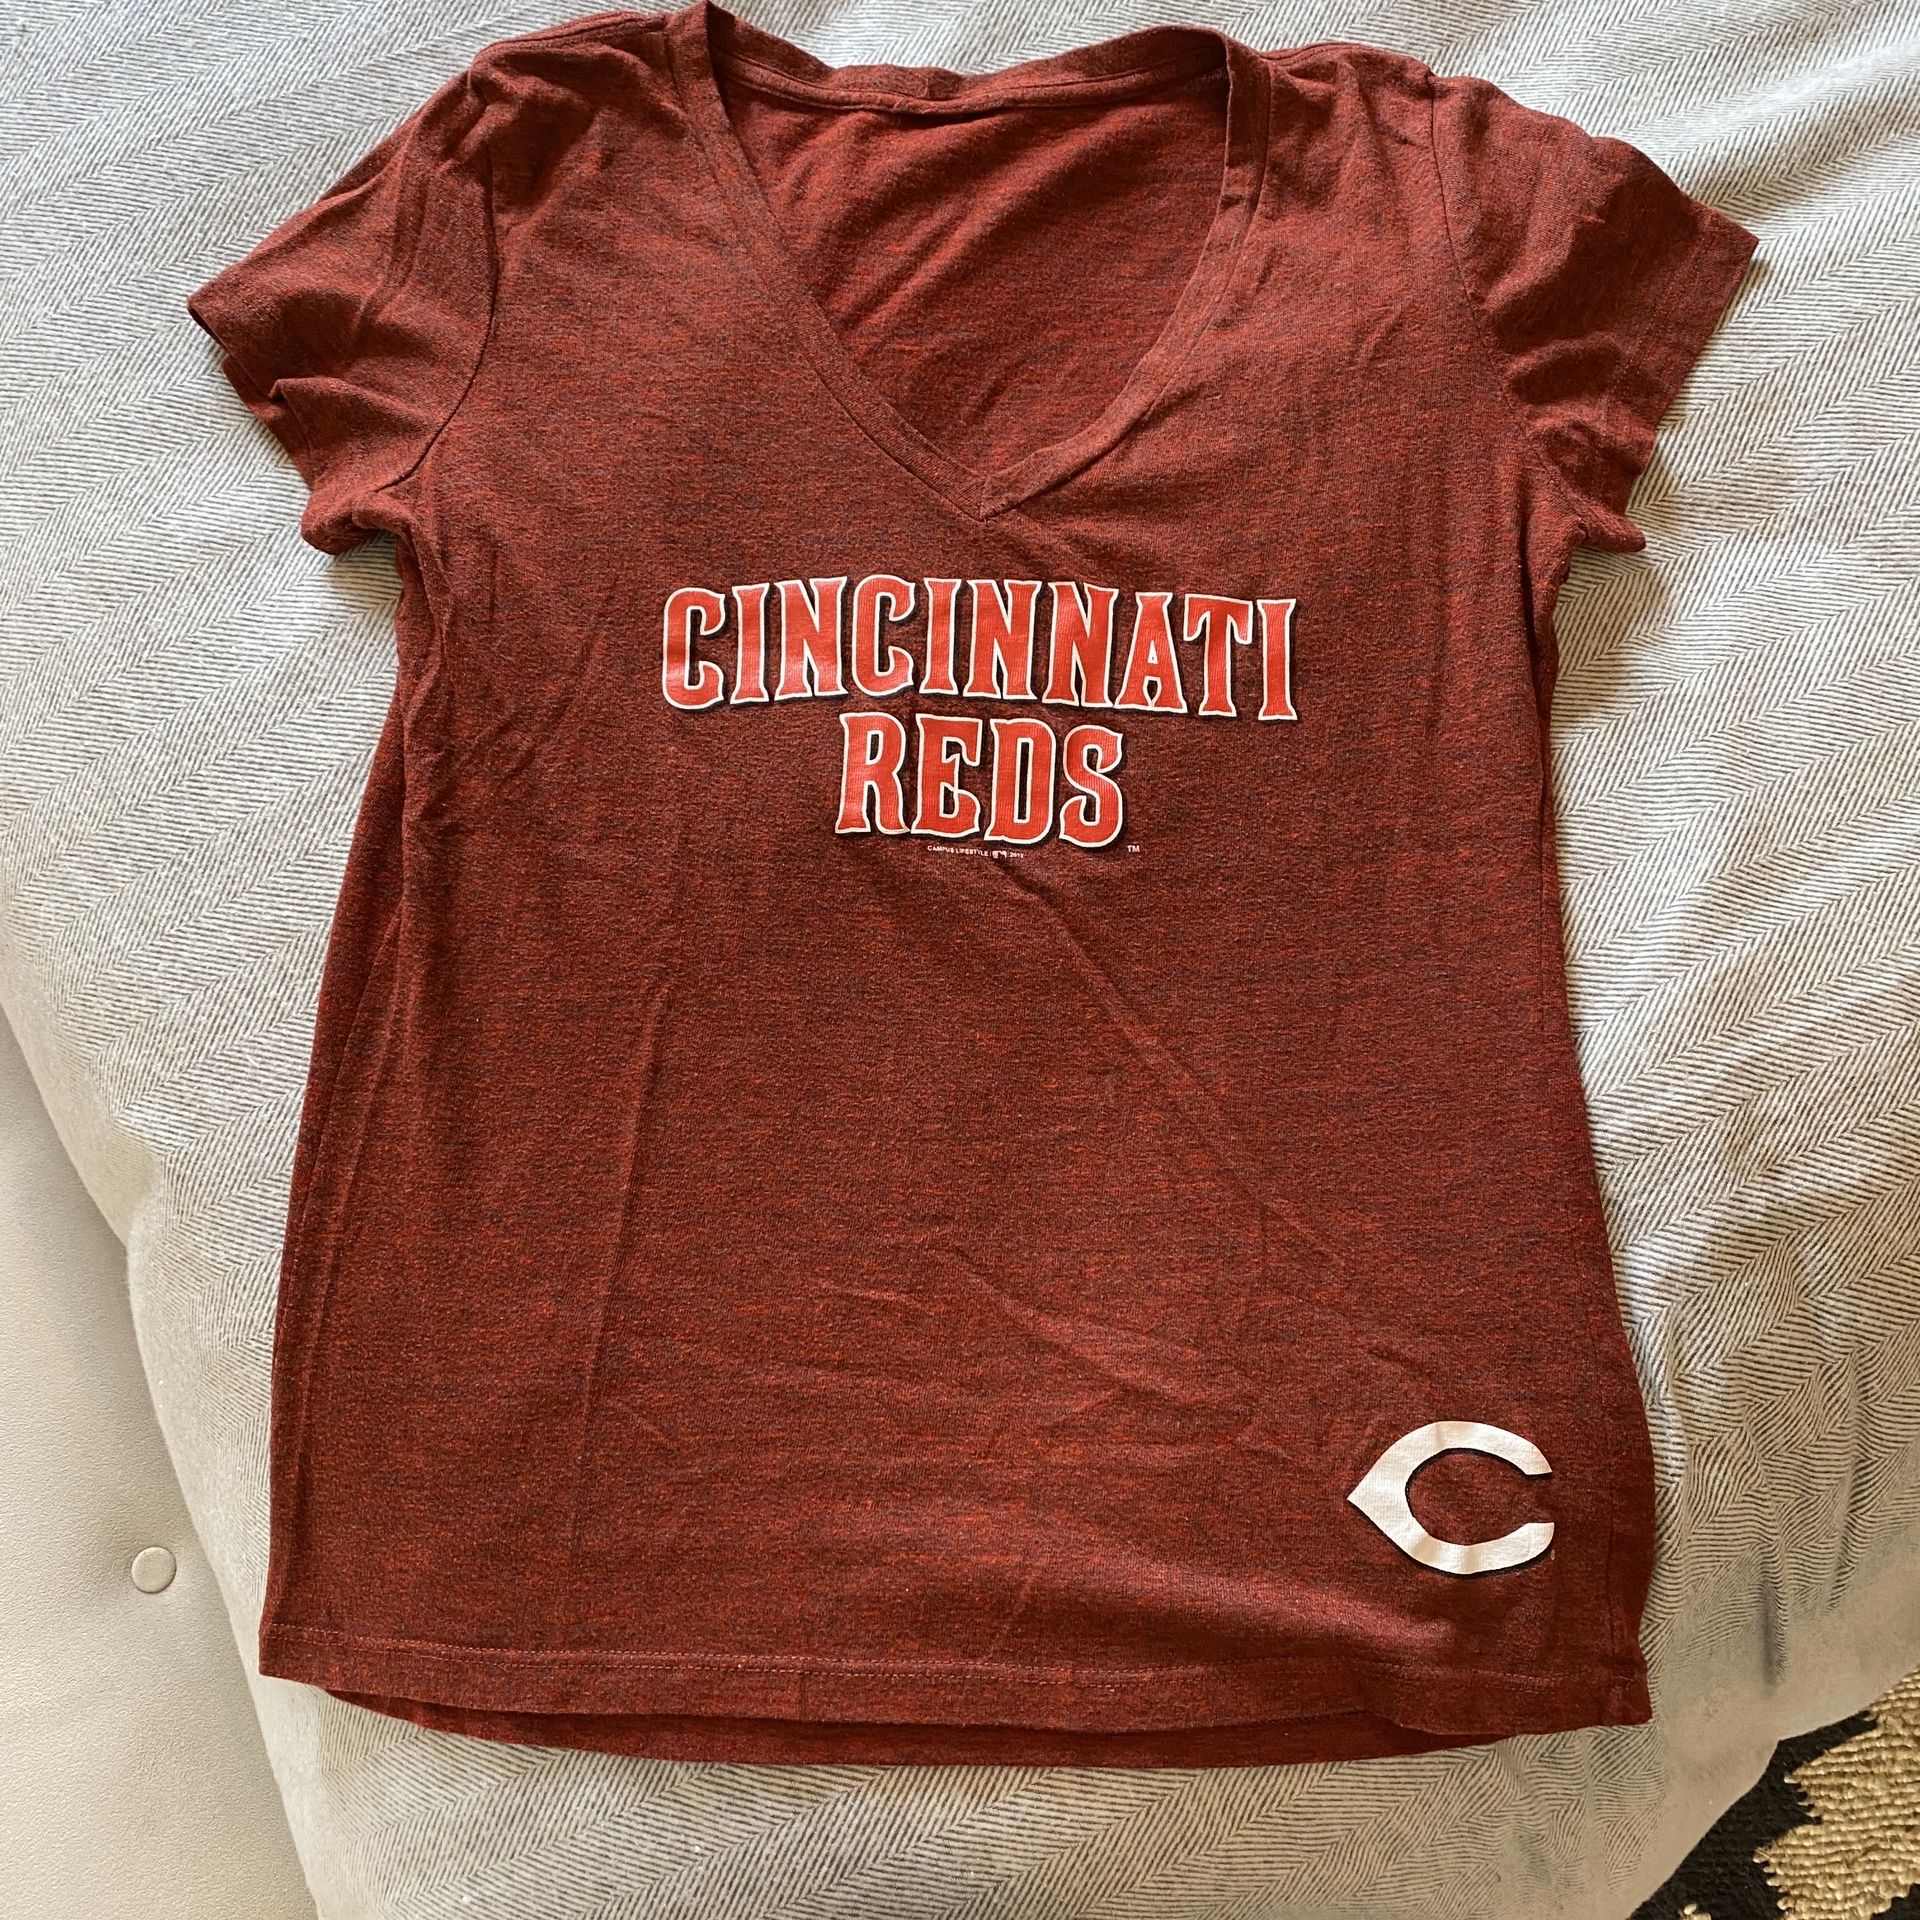 Cincinnati Reds women’s M baseball tee